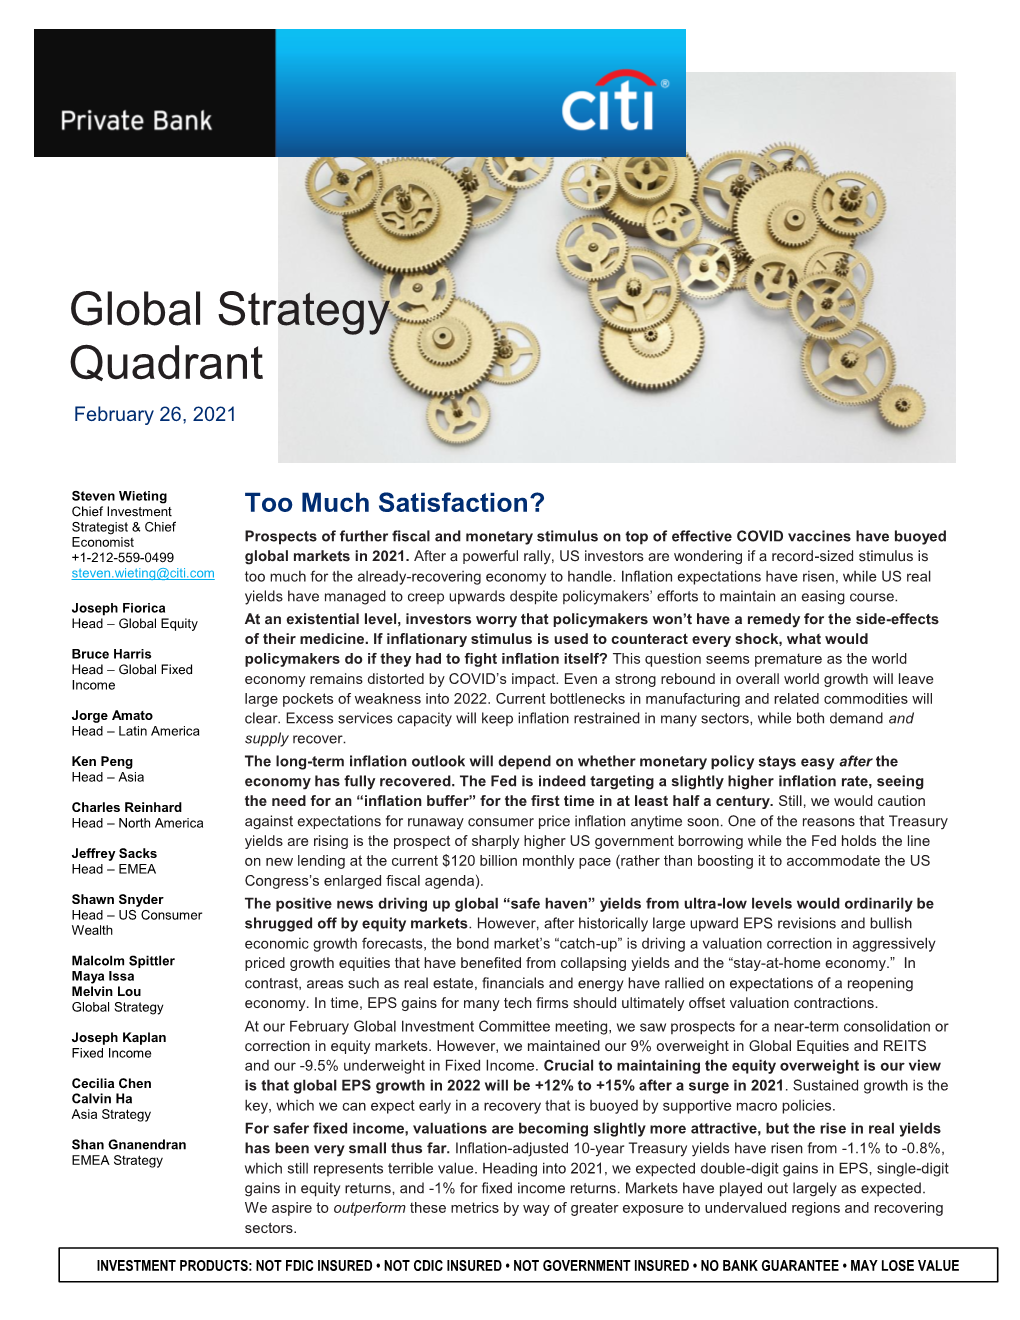 Global Strategy Quadrant February 26, 2021